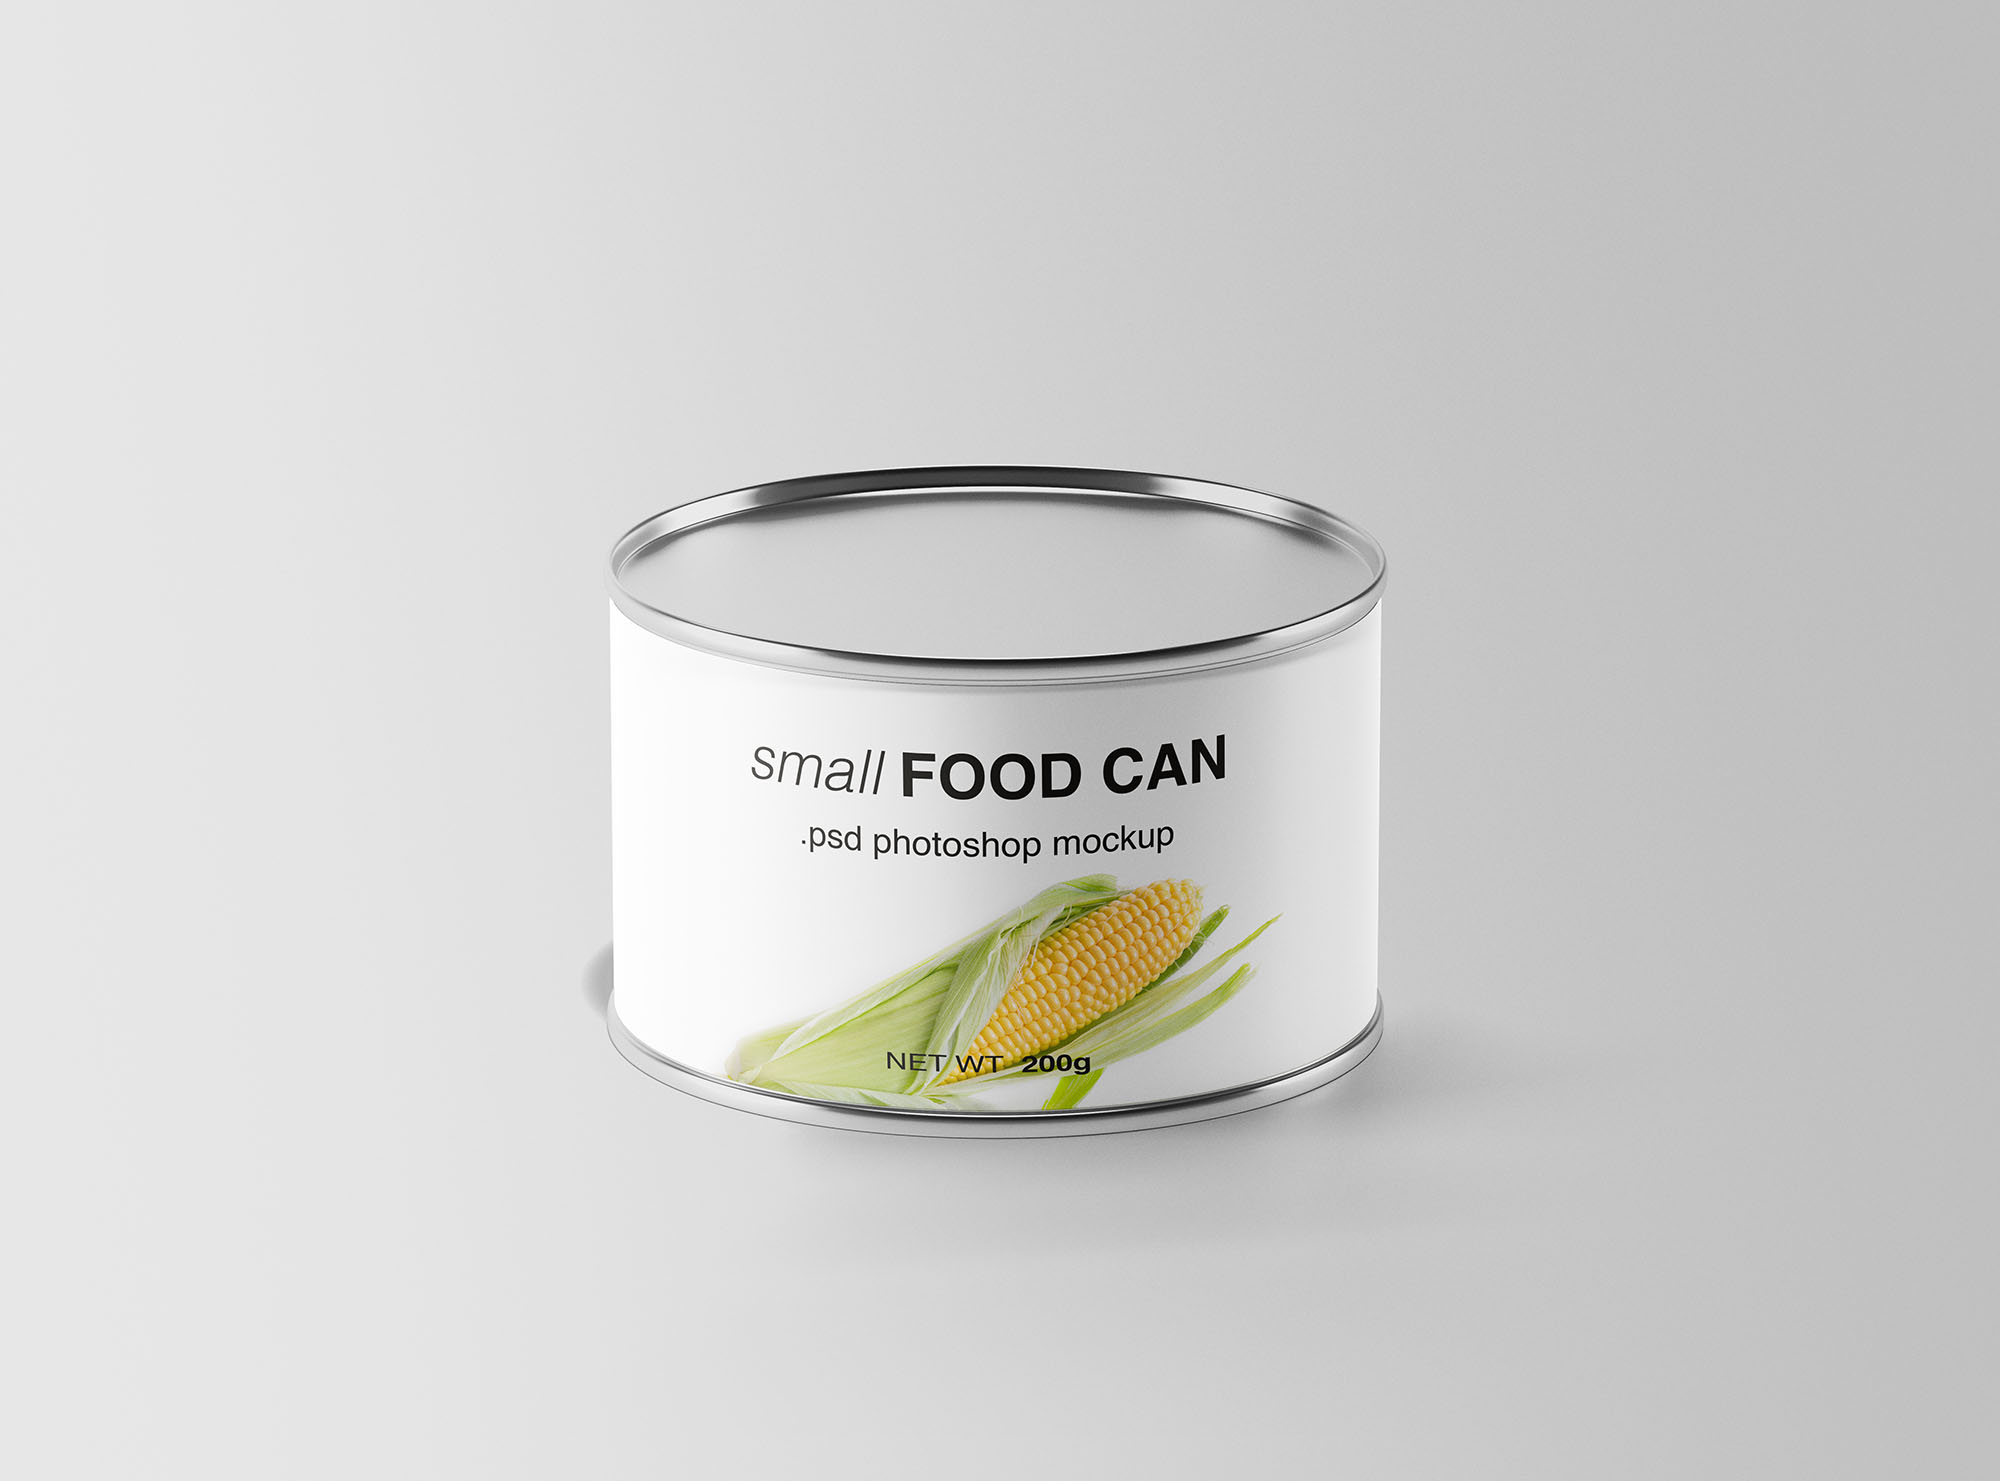 食品罐头包装设计效果图样机 Small Food Can M